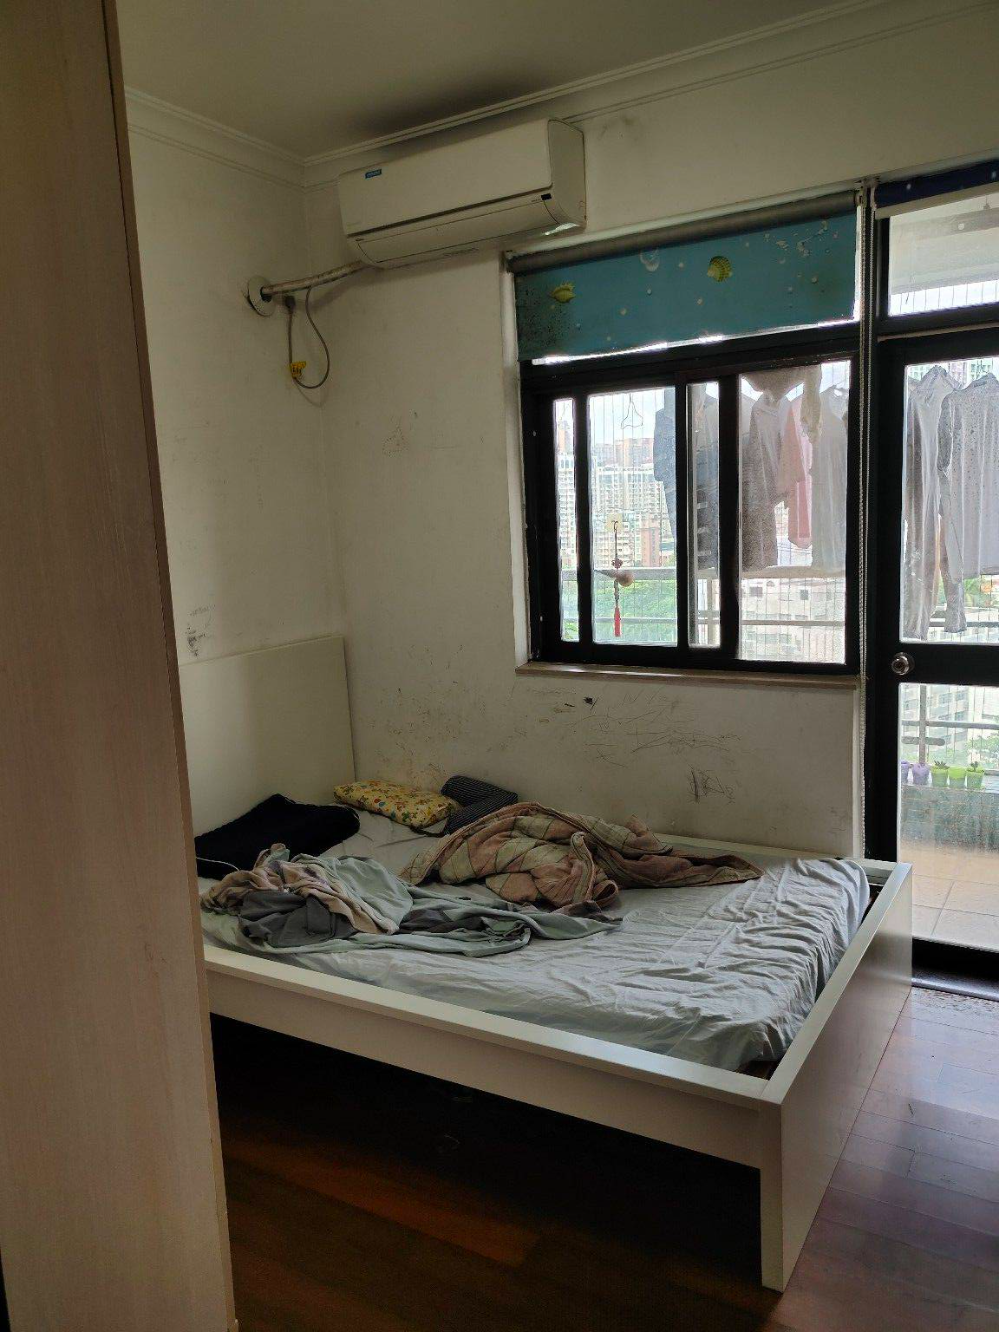 Guangzhou-Tianhe-Cozy Home,Clean&Comfy,No Gender Limit,Hustle & Bustle,LGBTQ Friendly